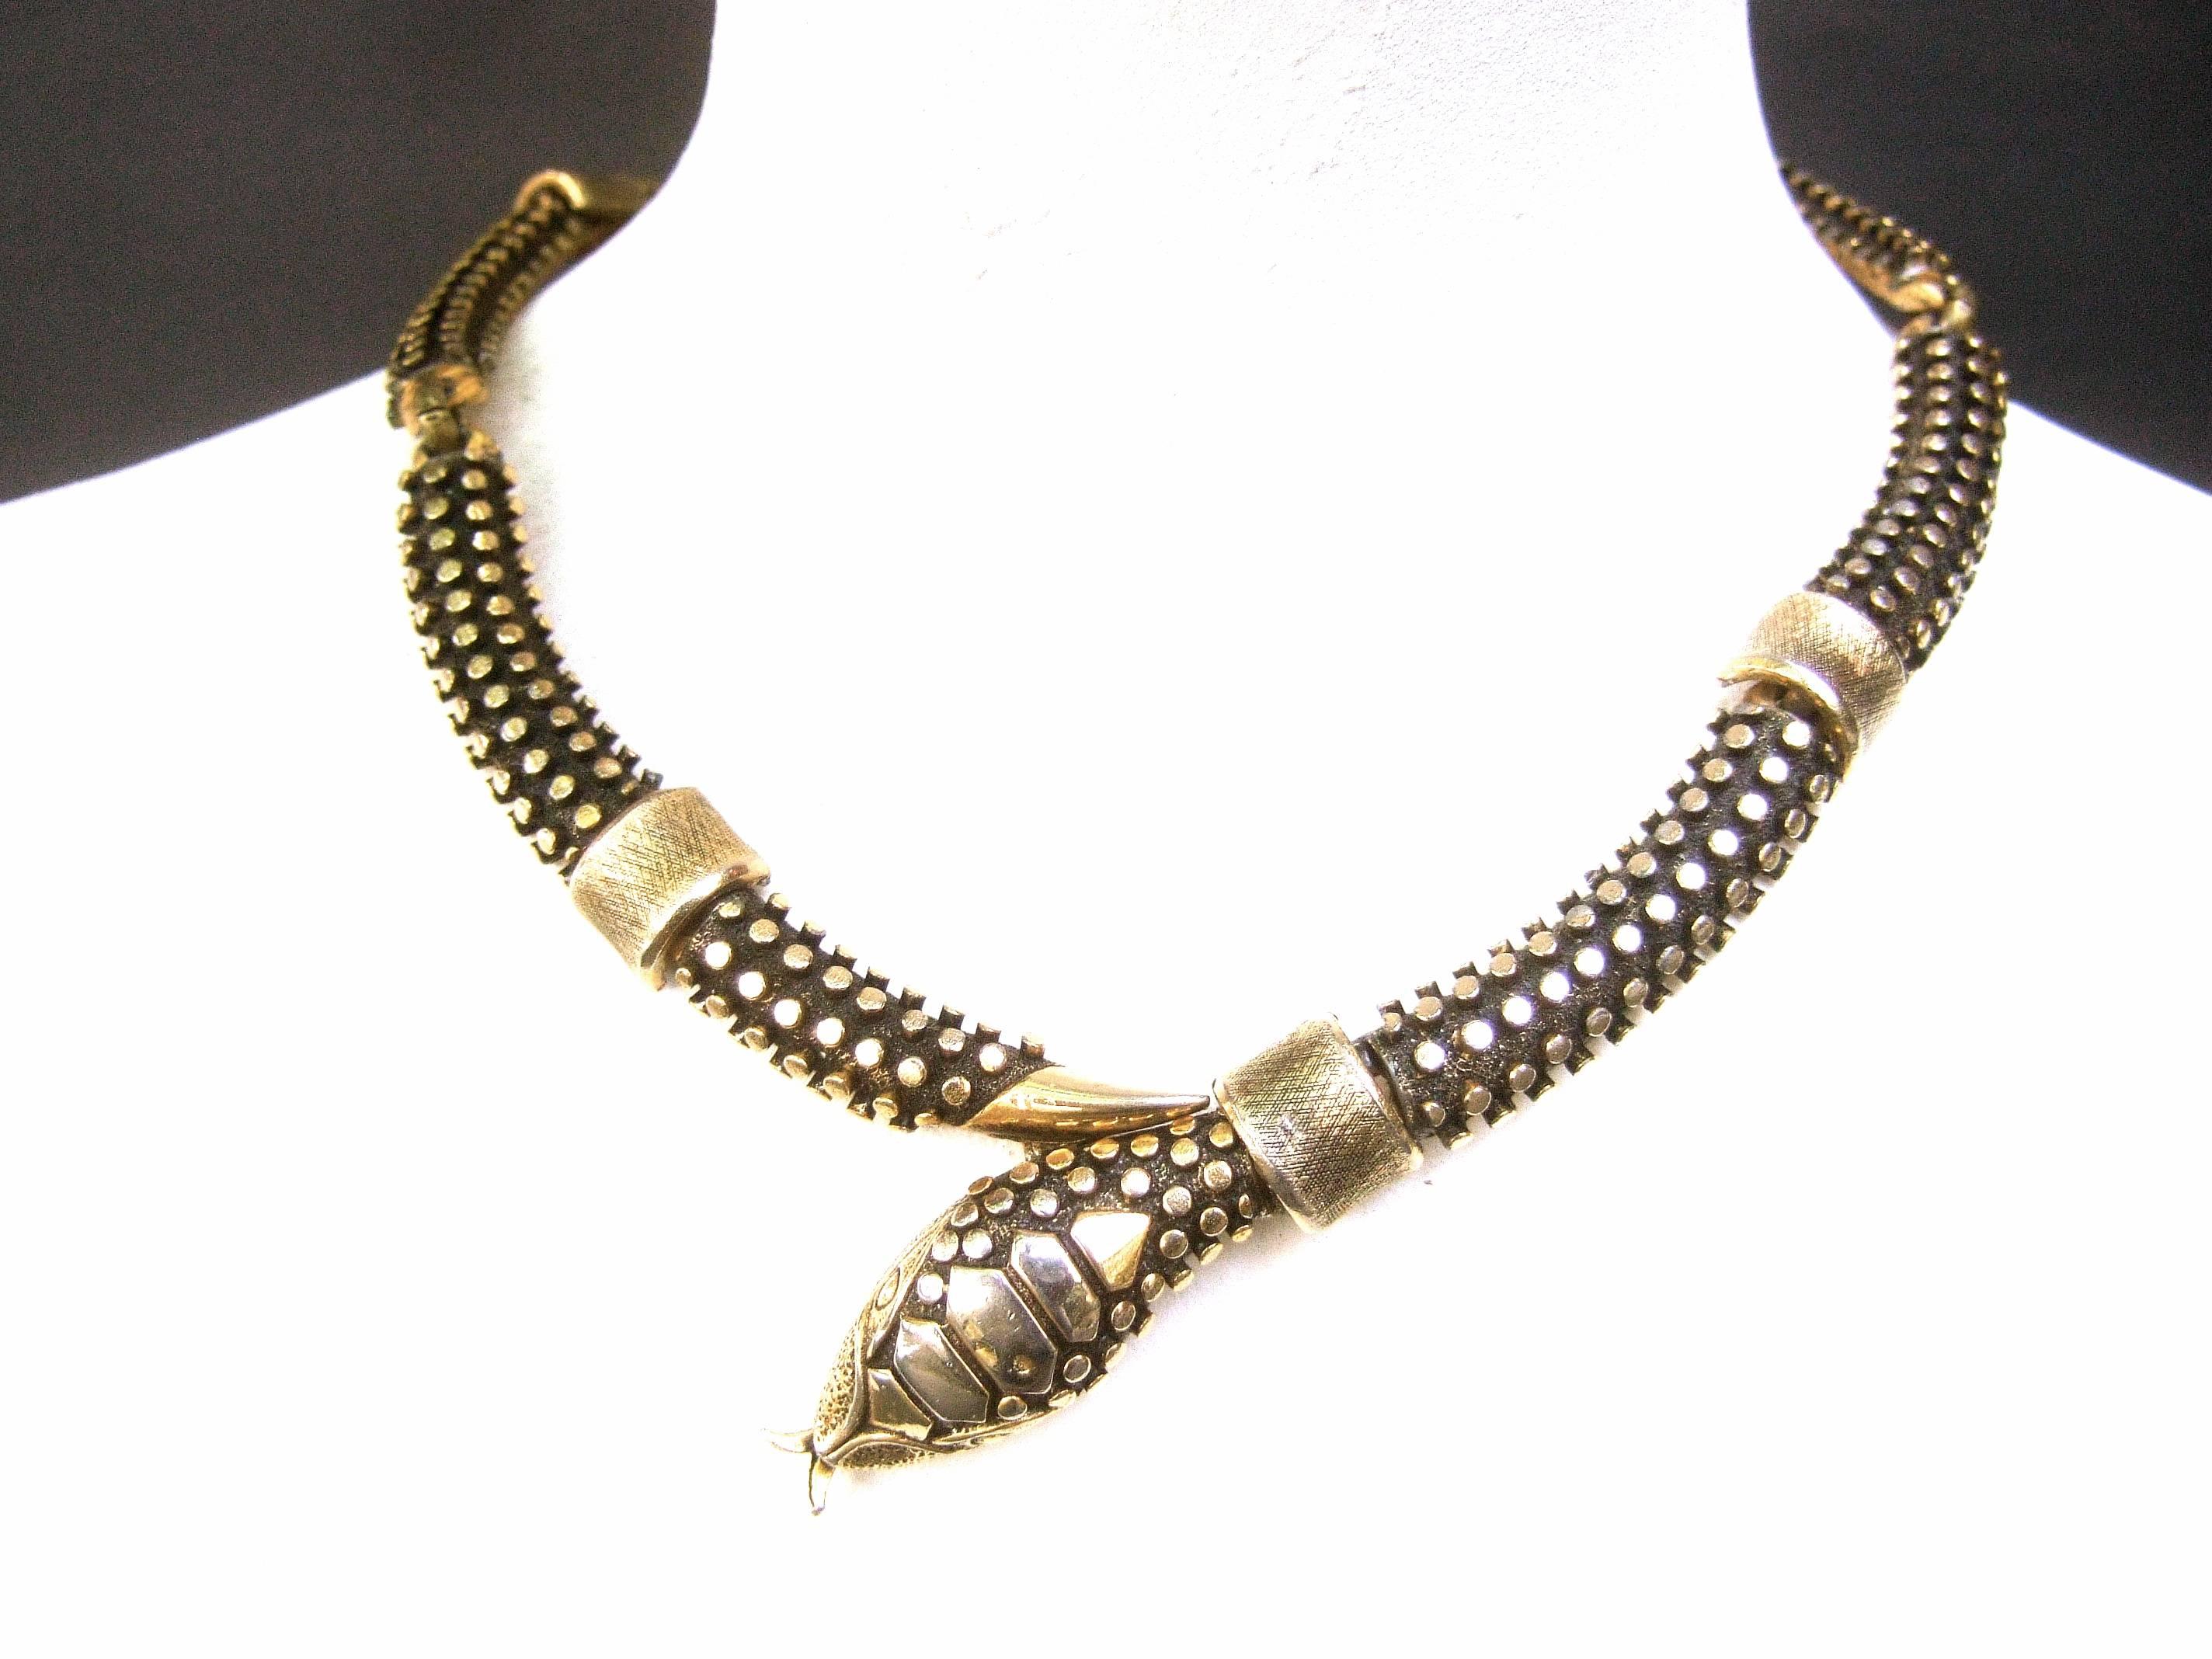 Egyptian Revival RESERVED Avant Garde Gilt Metal Articulated Serpent Choker Necklace circa 1970